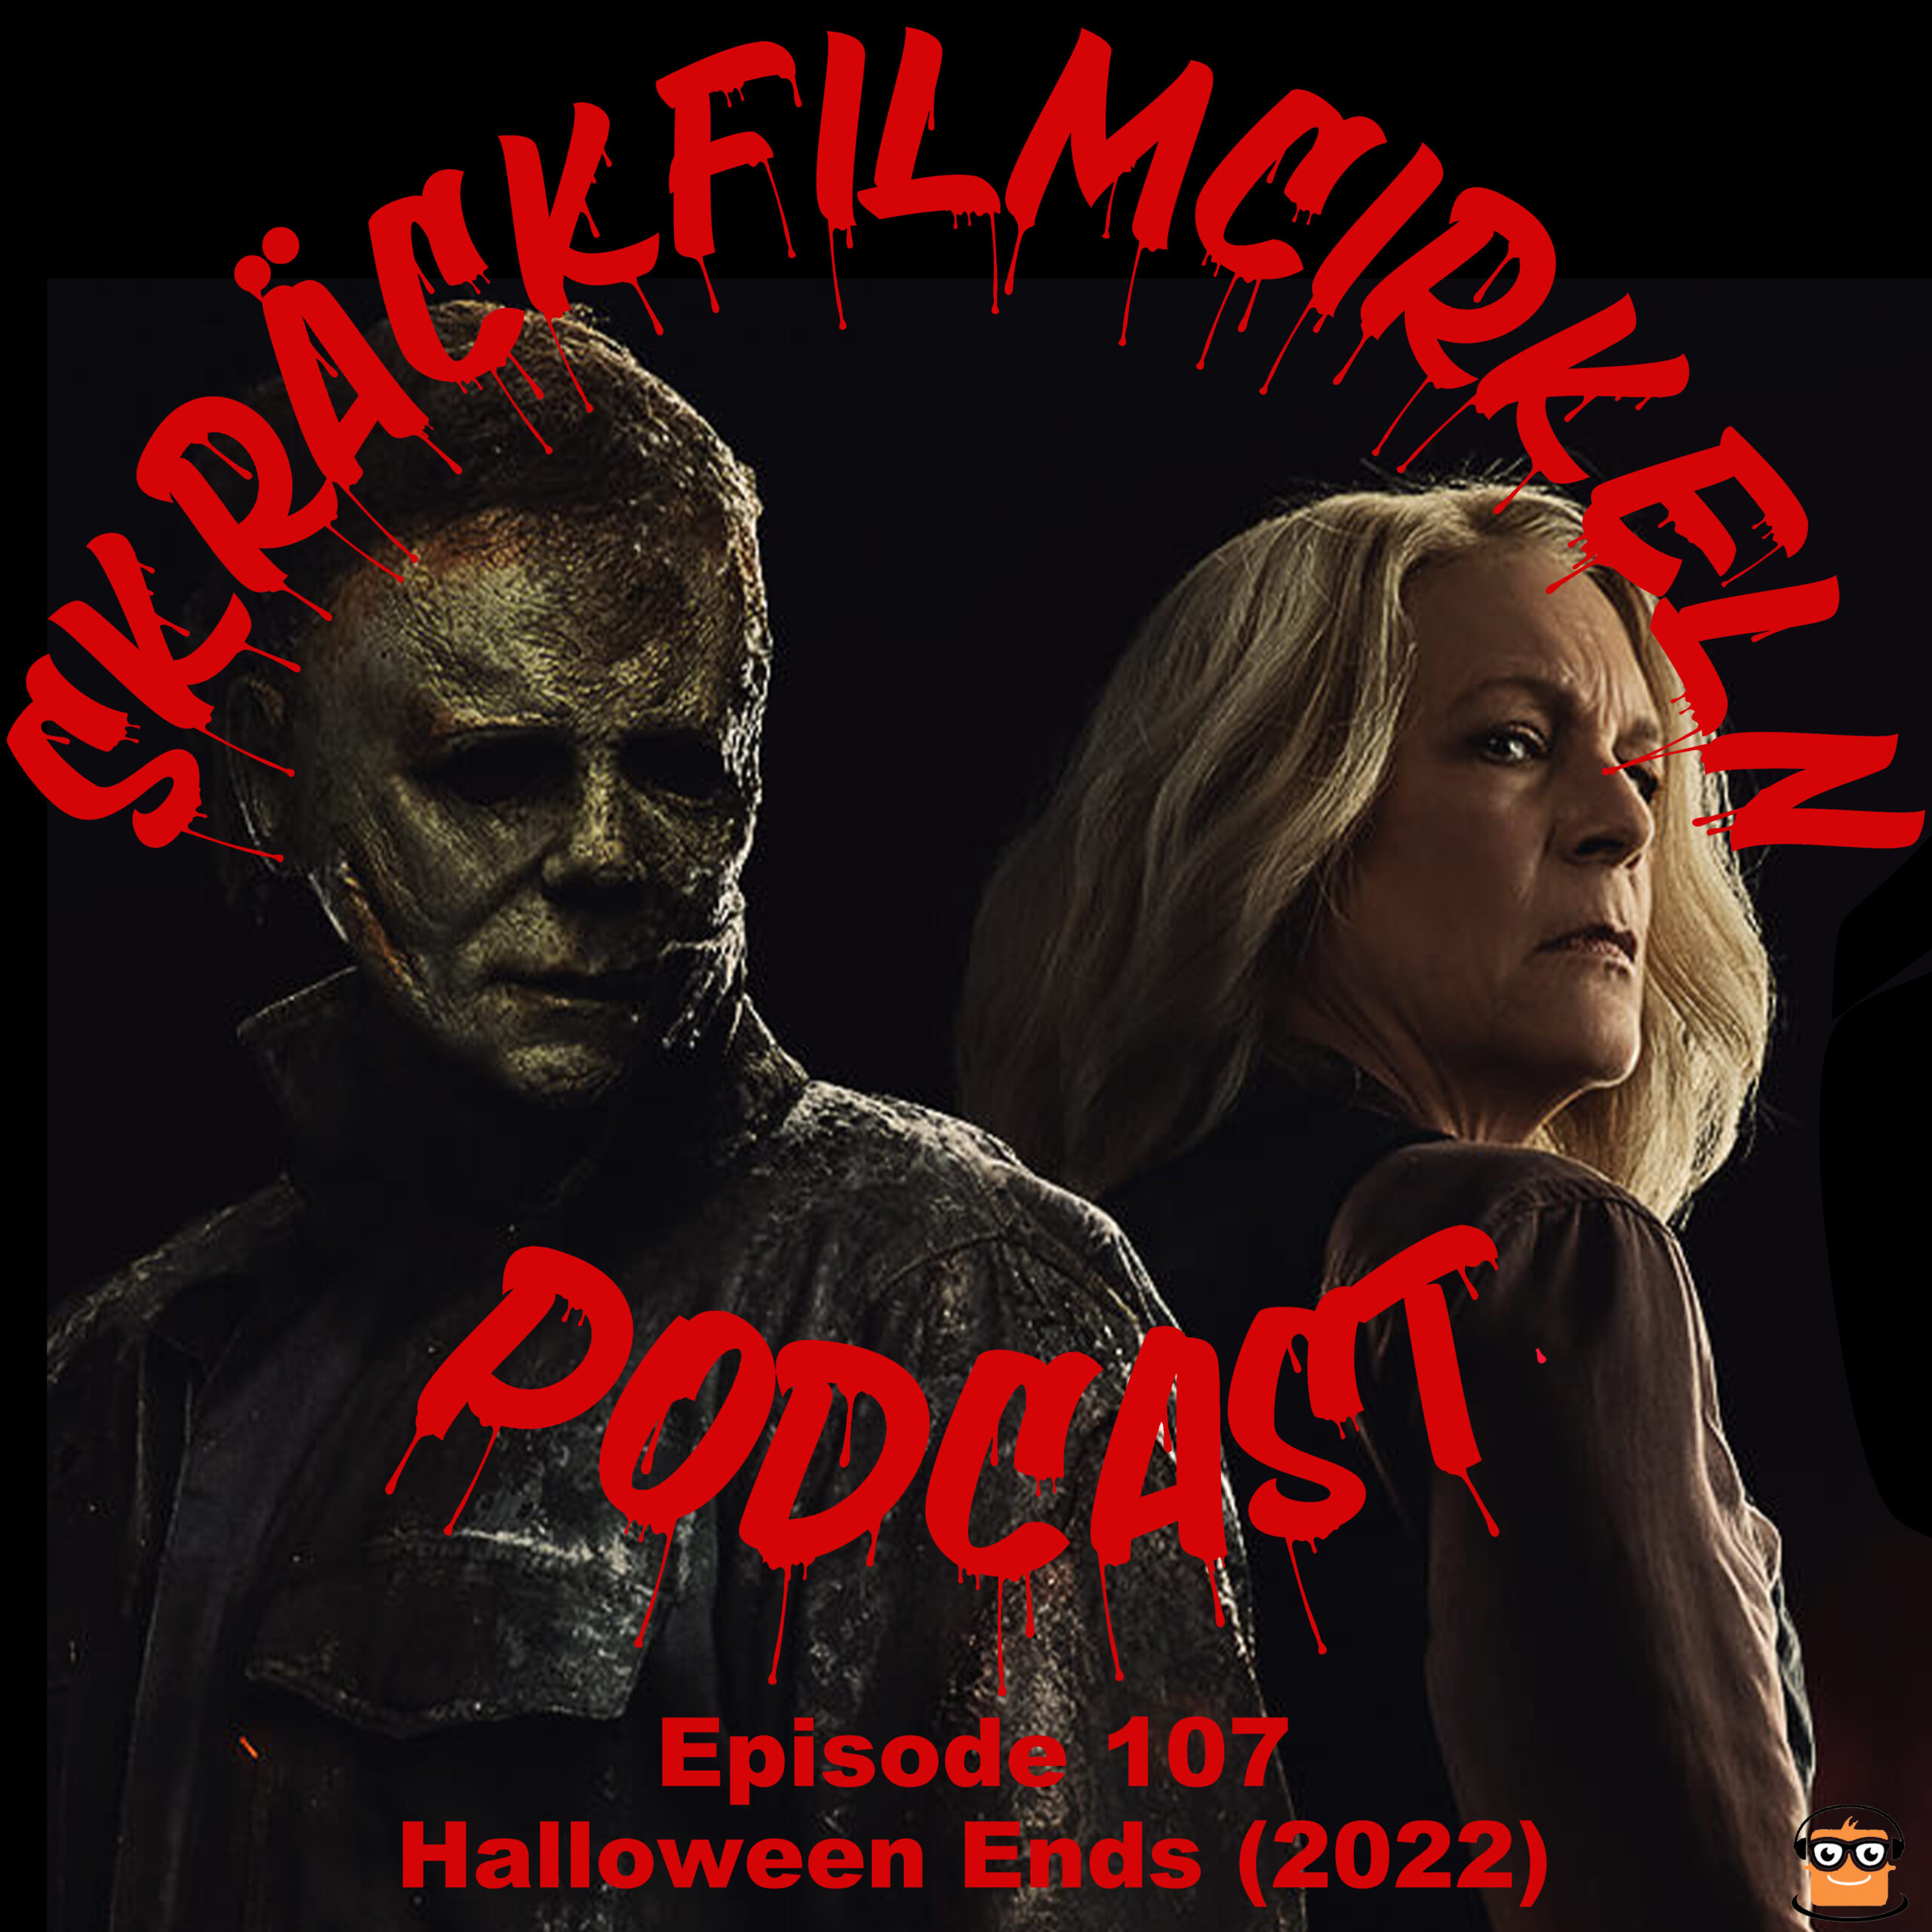 Episode 110 – Halloween Ends (2022)